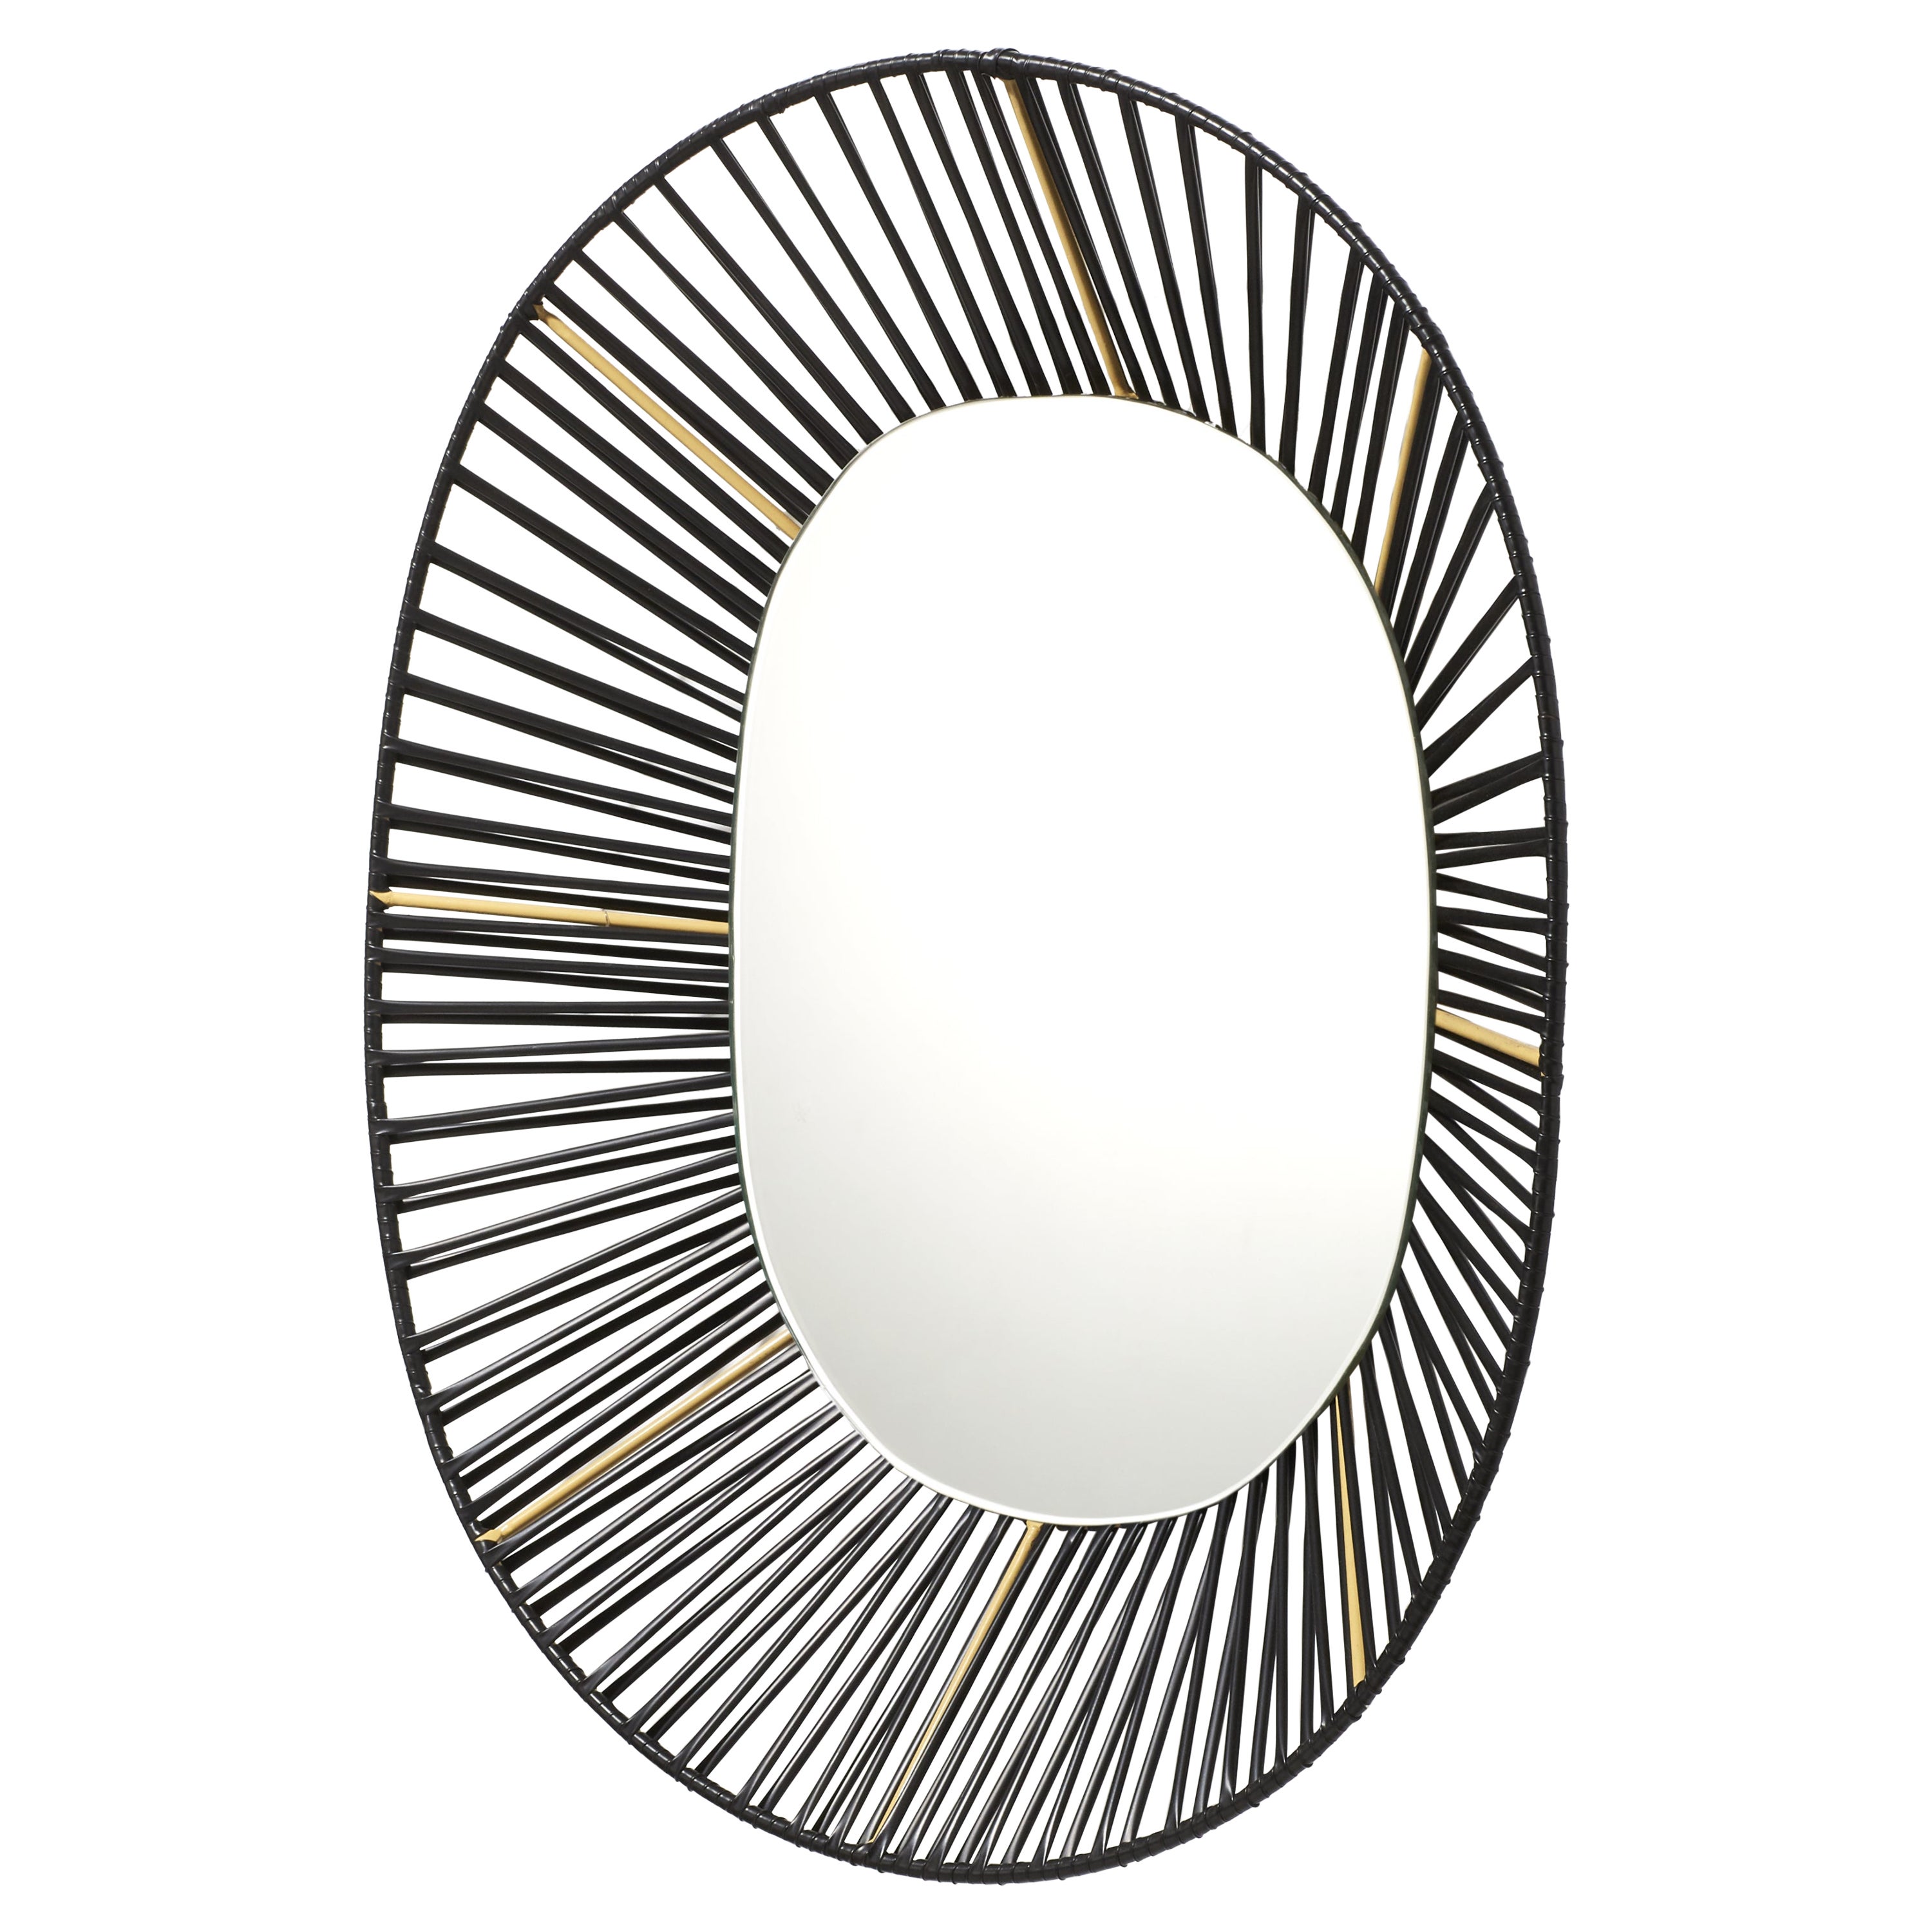 Cesta Oval Mirror by Pauline Deltour